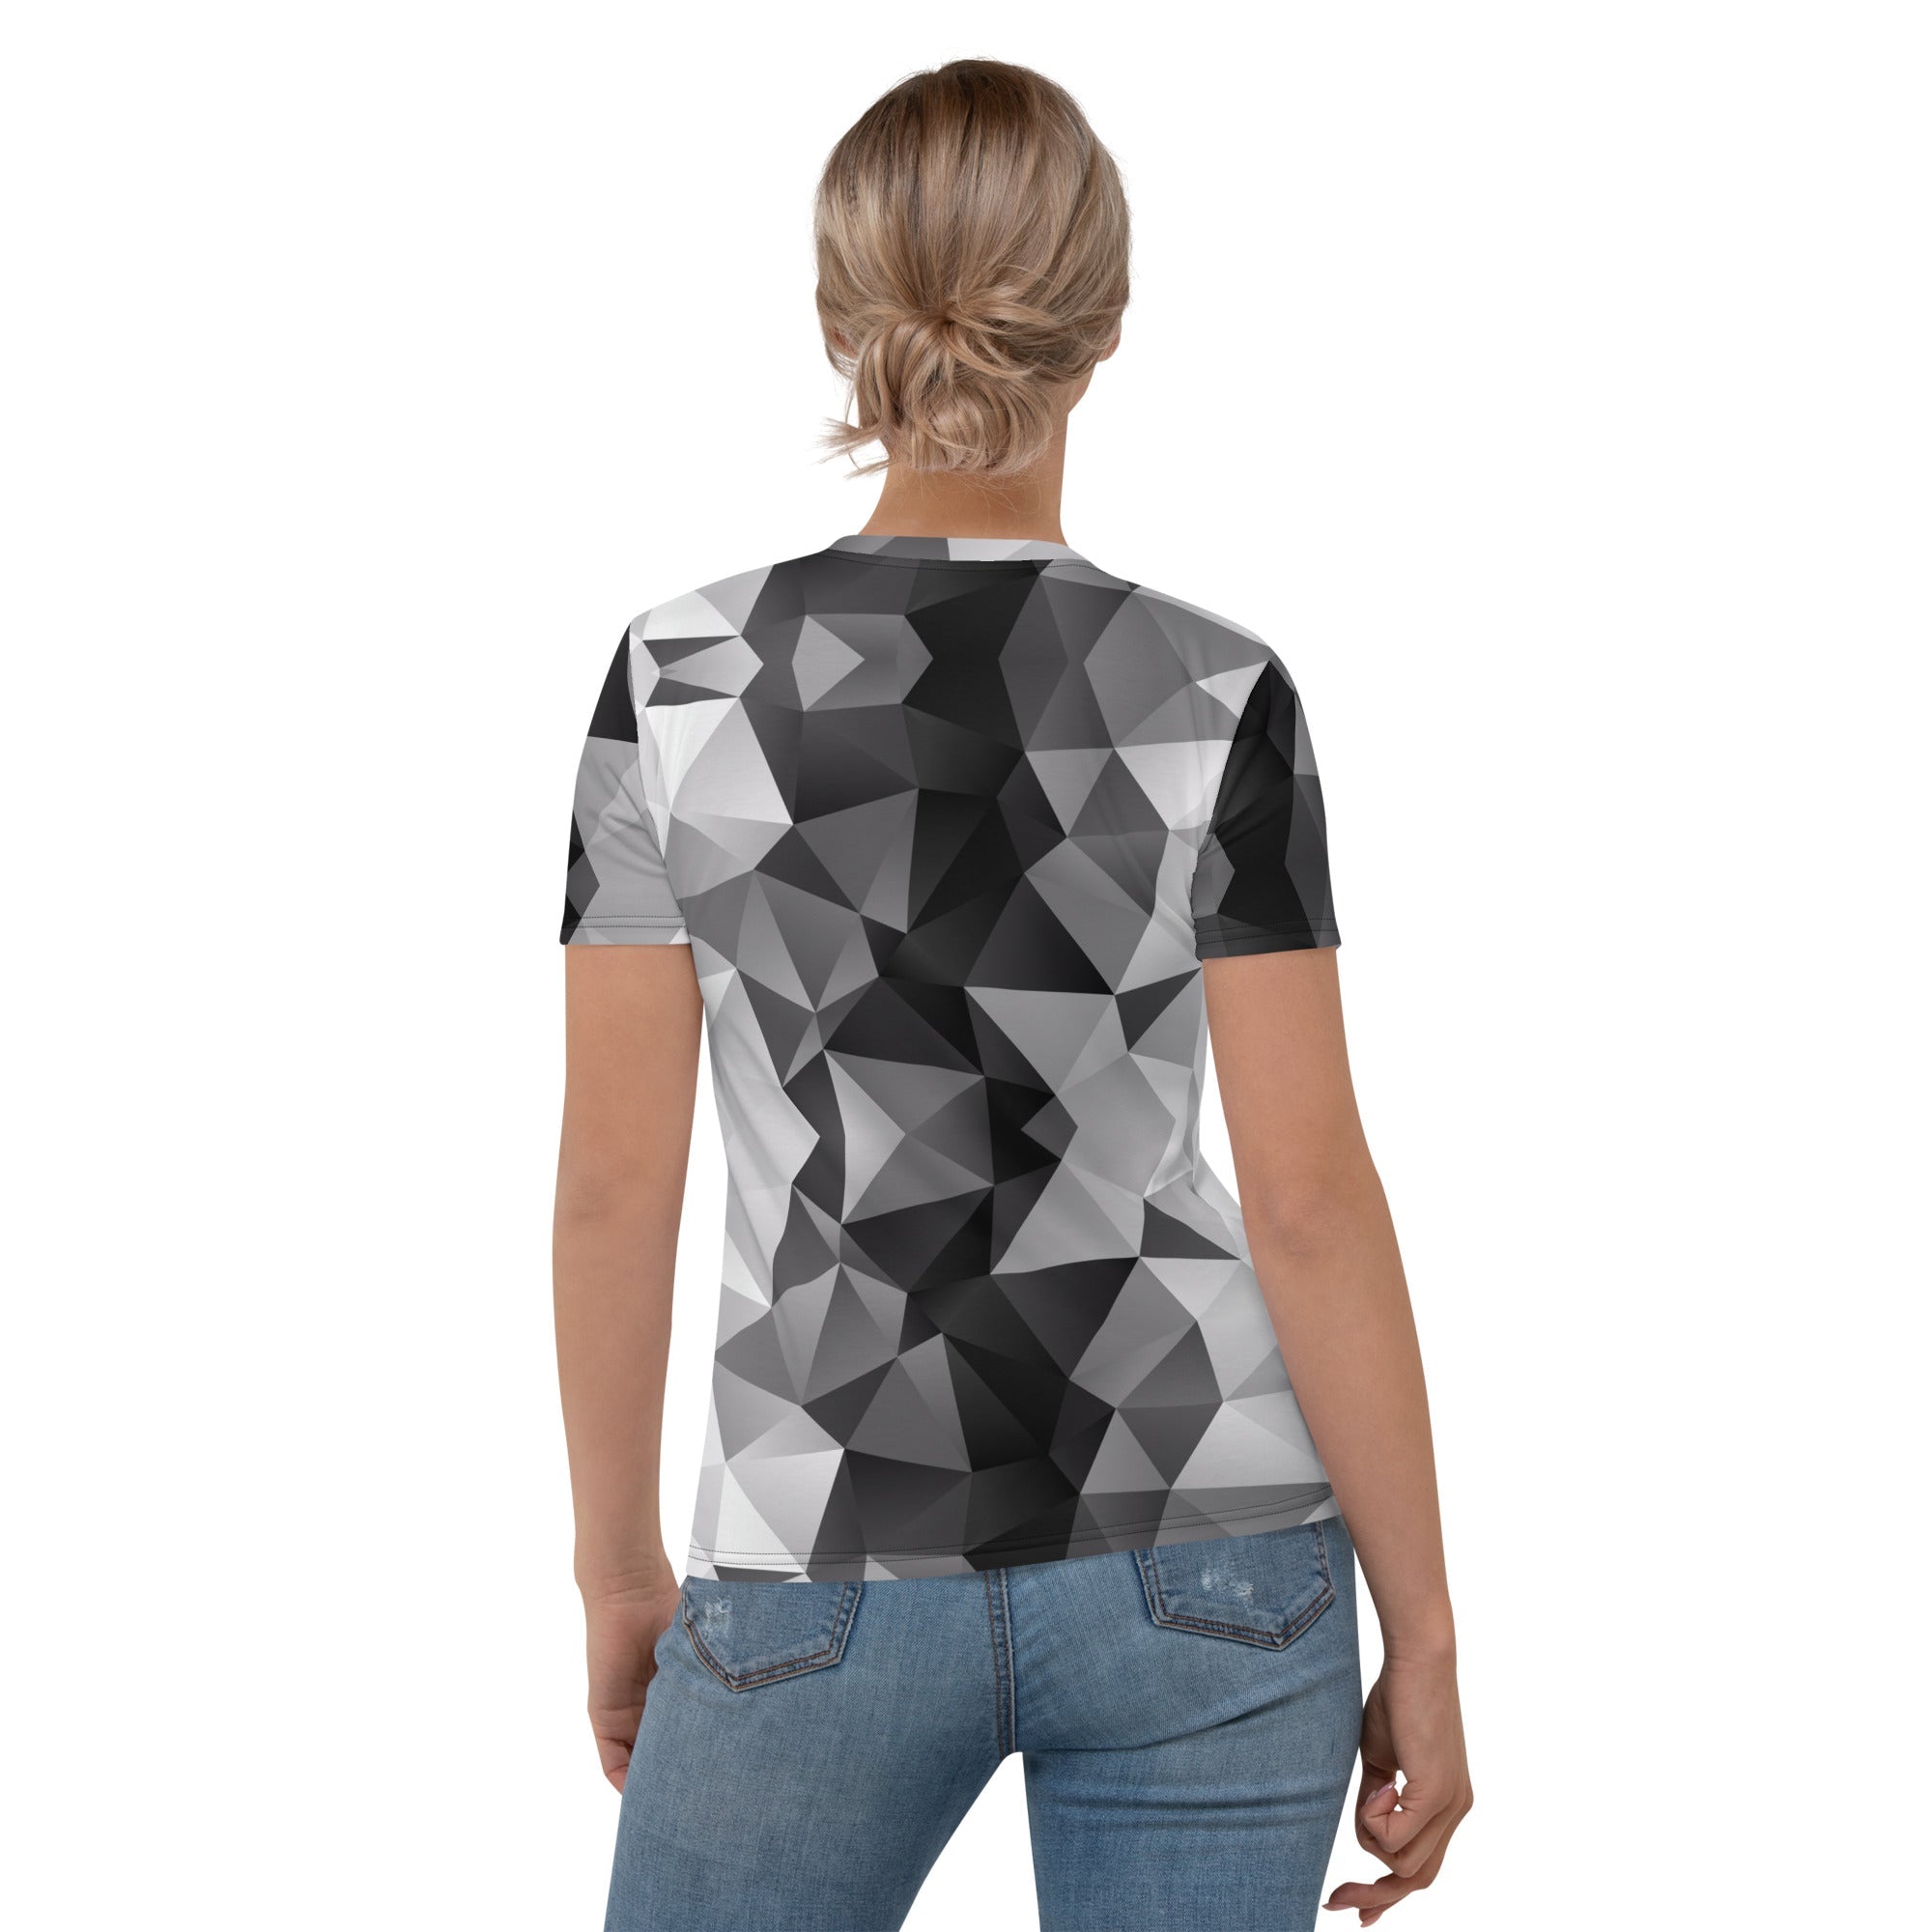 Glass Geometric T-shirt